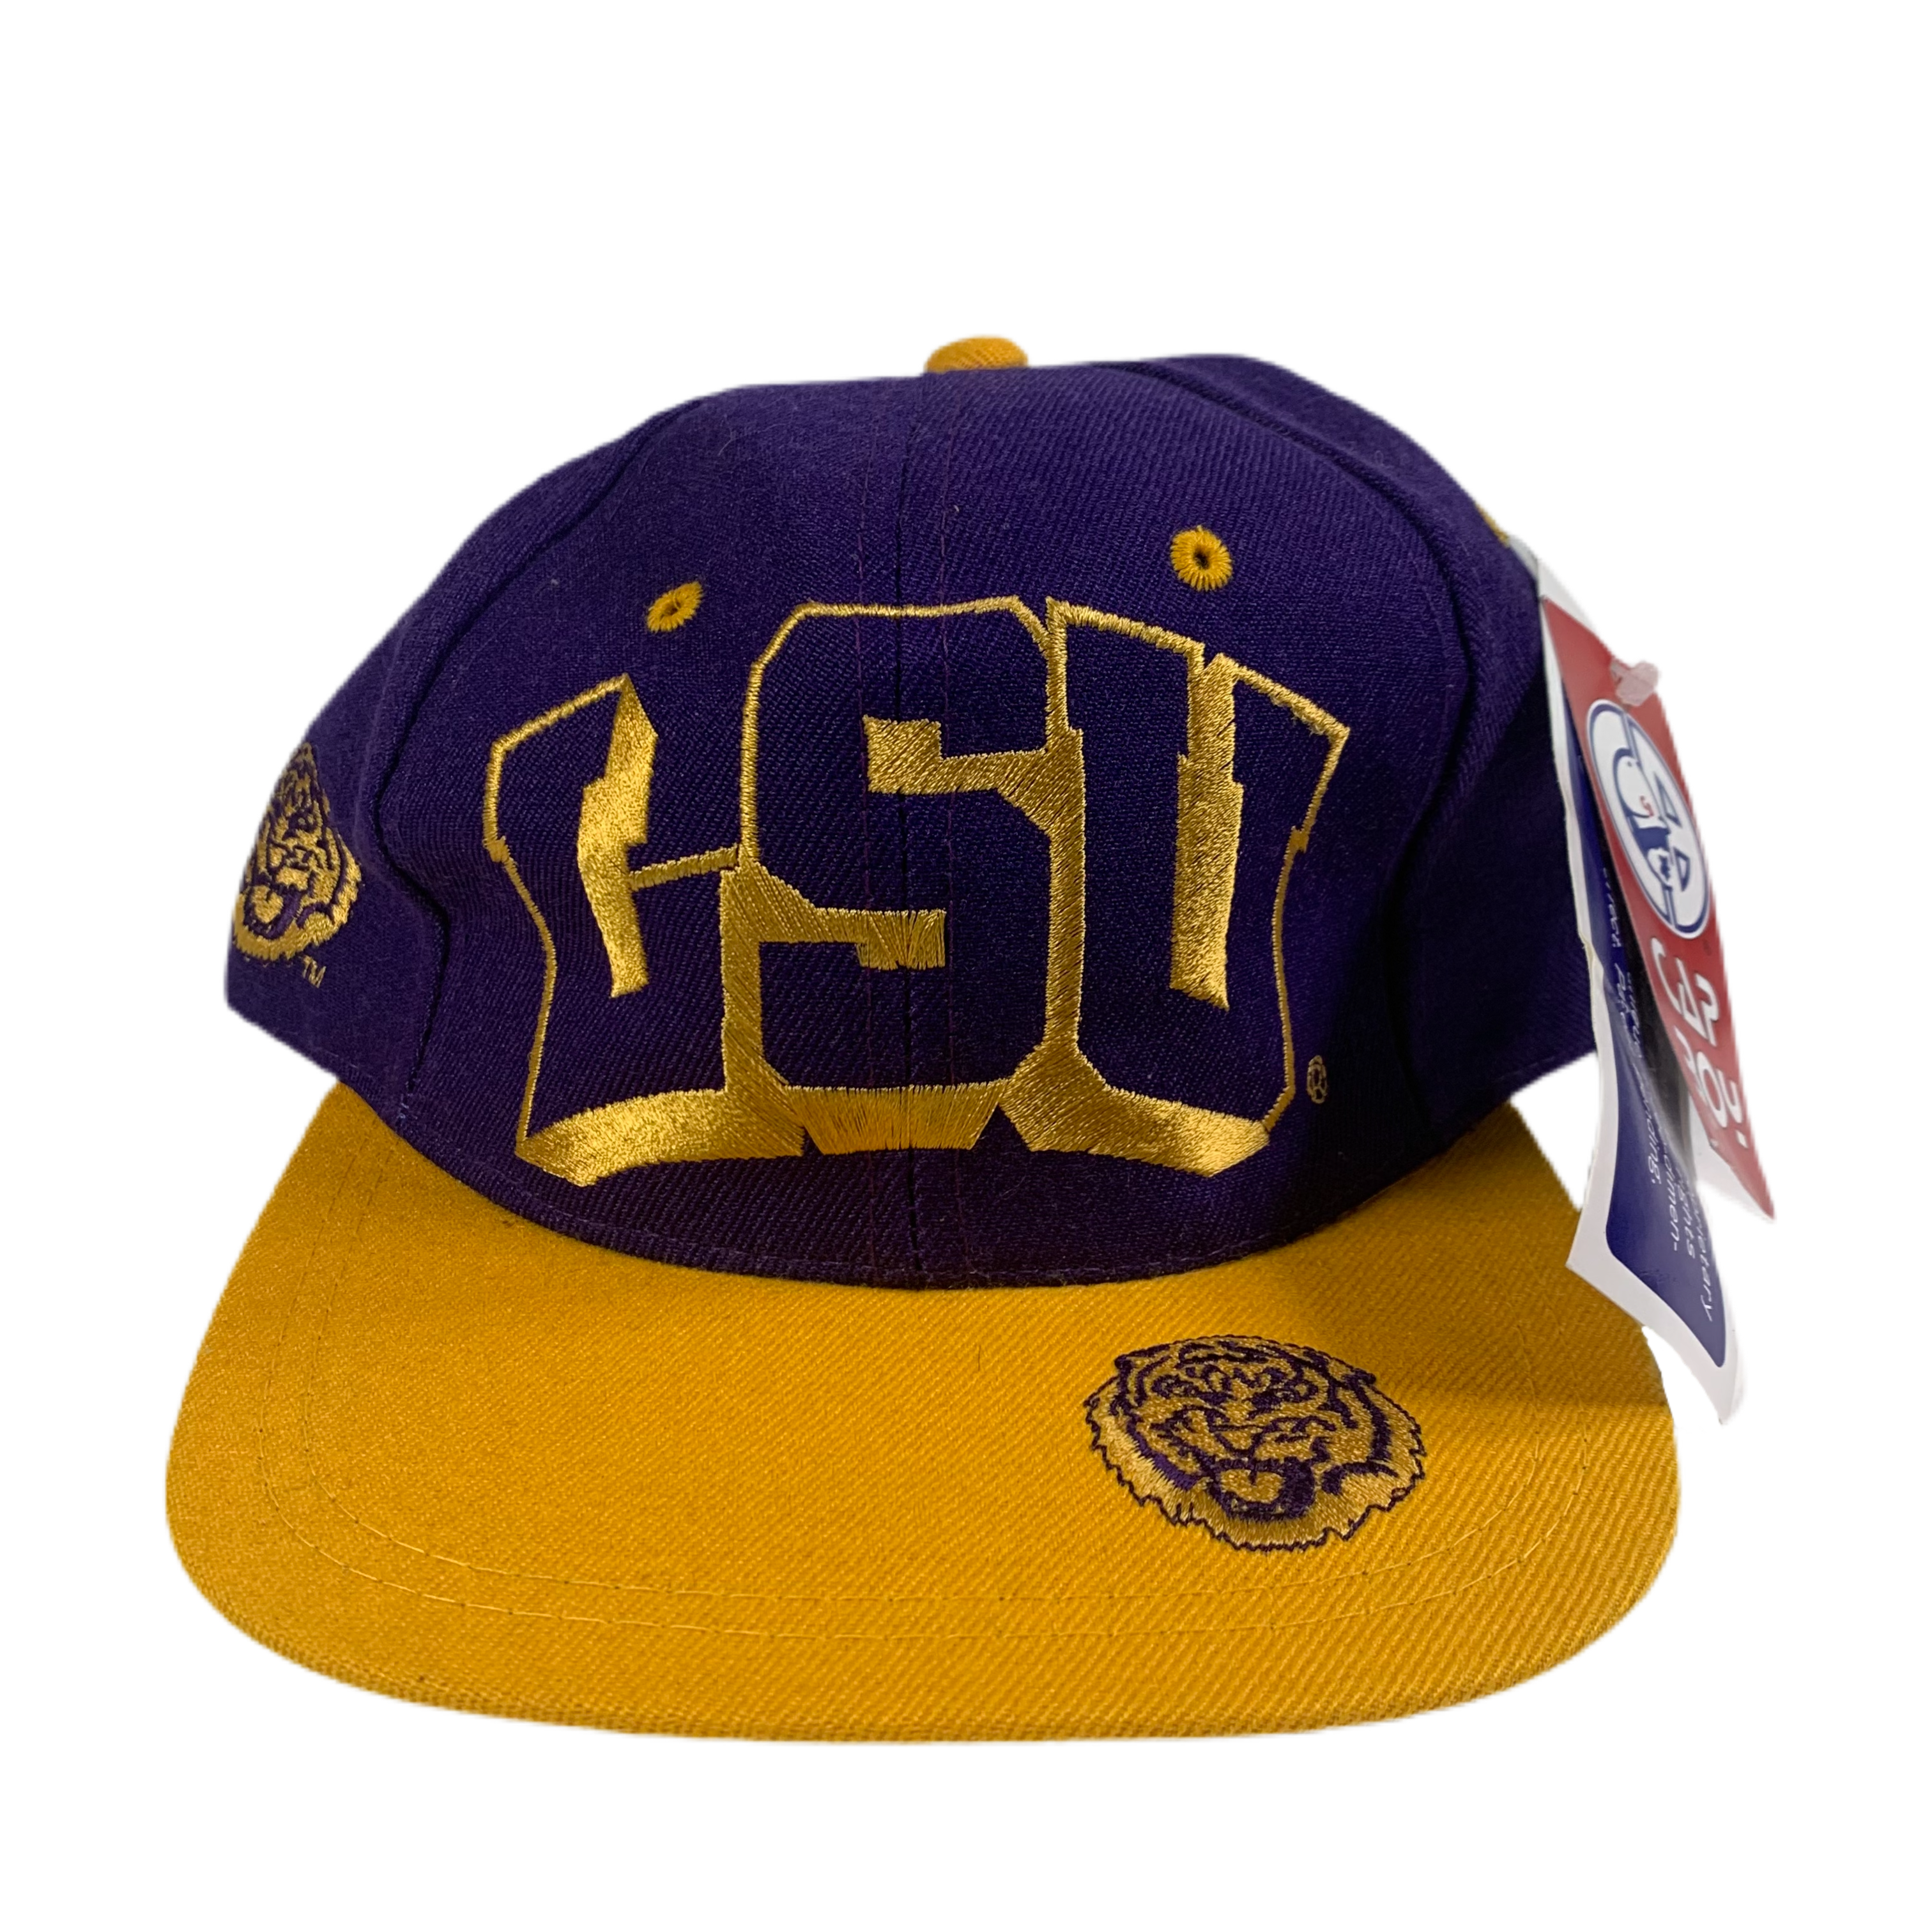 Vintage Louisiana State University Tigers Hat